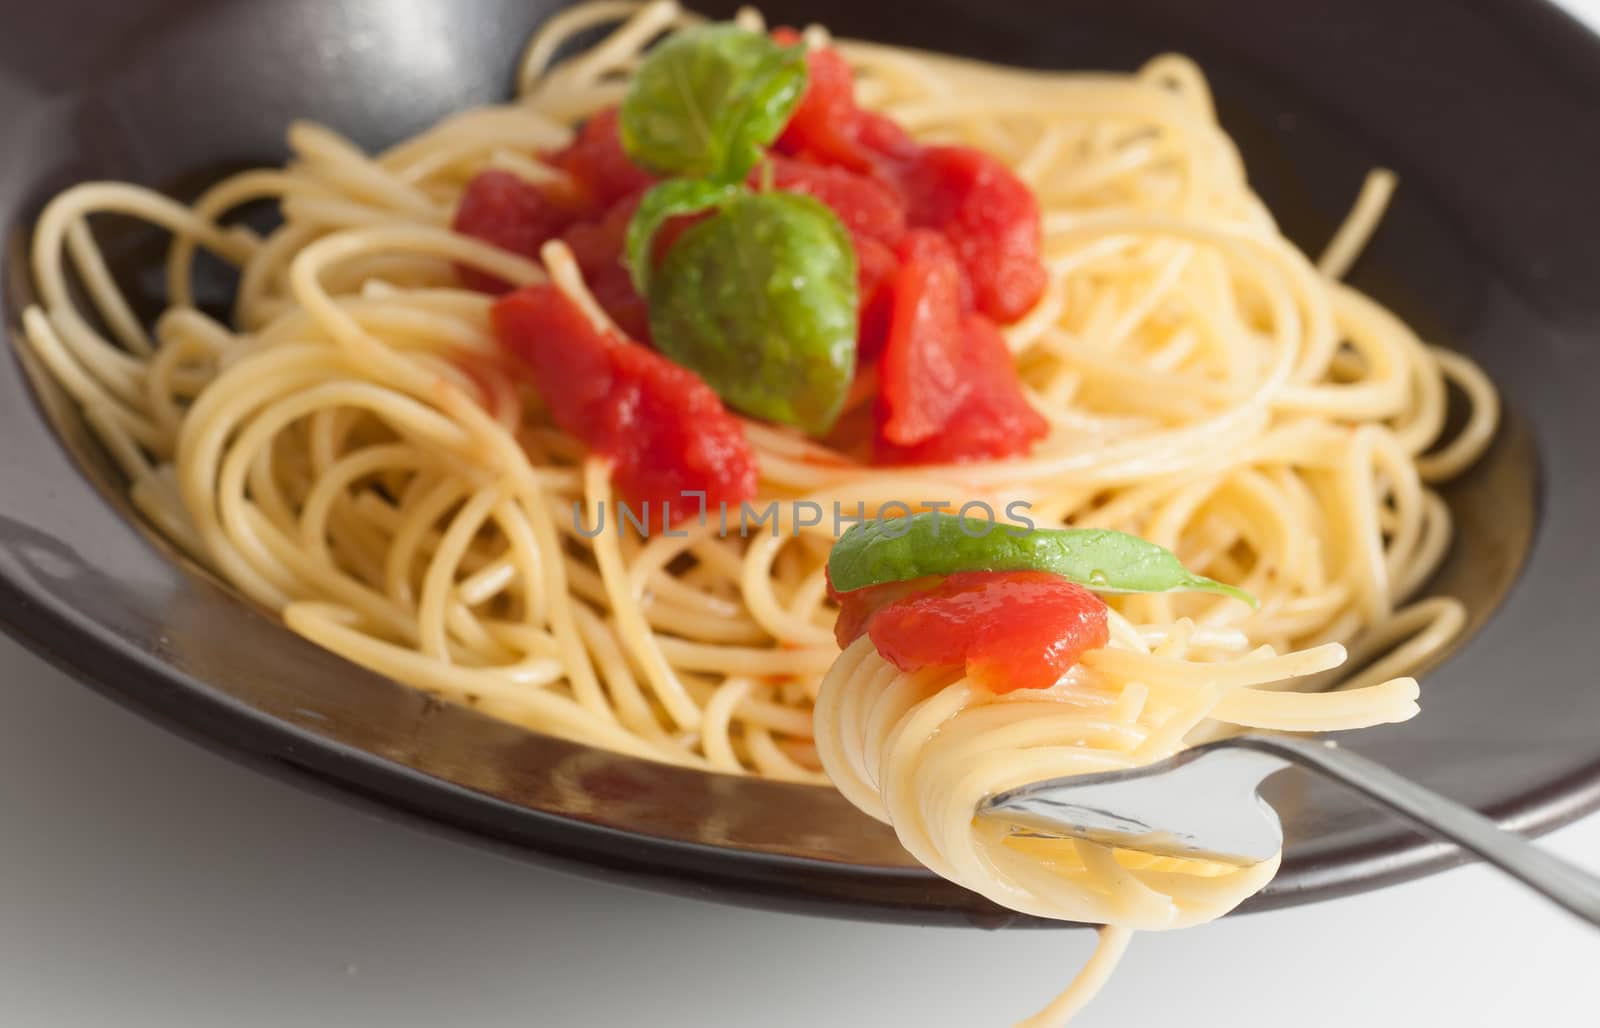 spaghetti with fresh tomato and basil